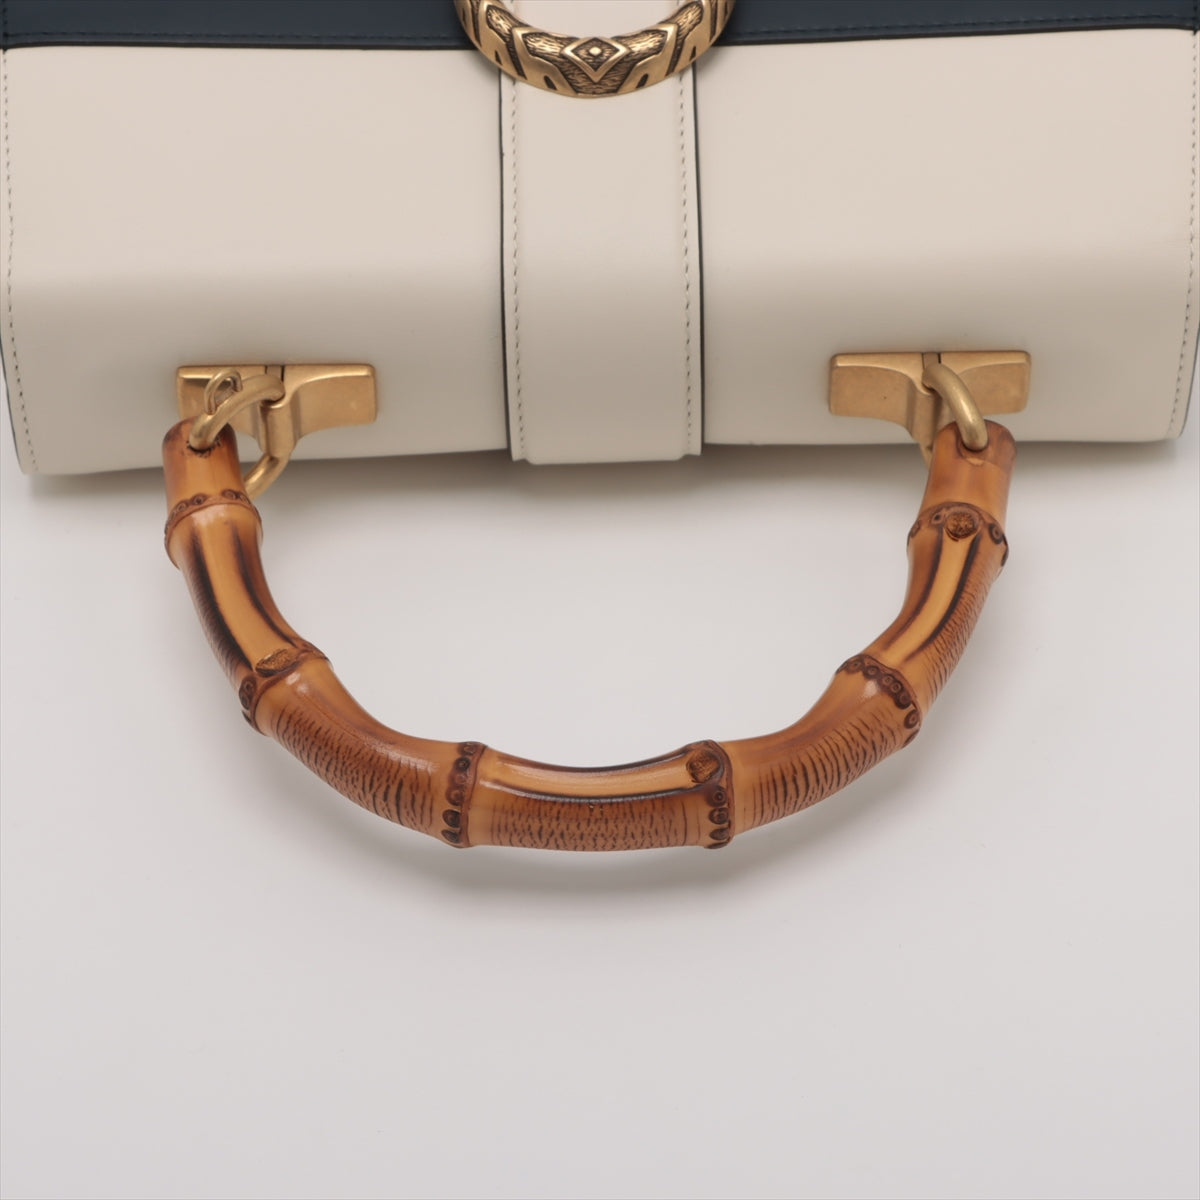 Gucci Bamboo Dionysus Leather 2way handbag Beige 448075